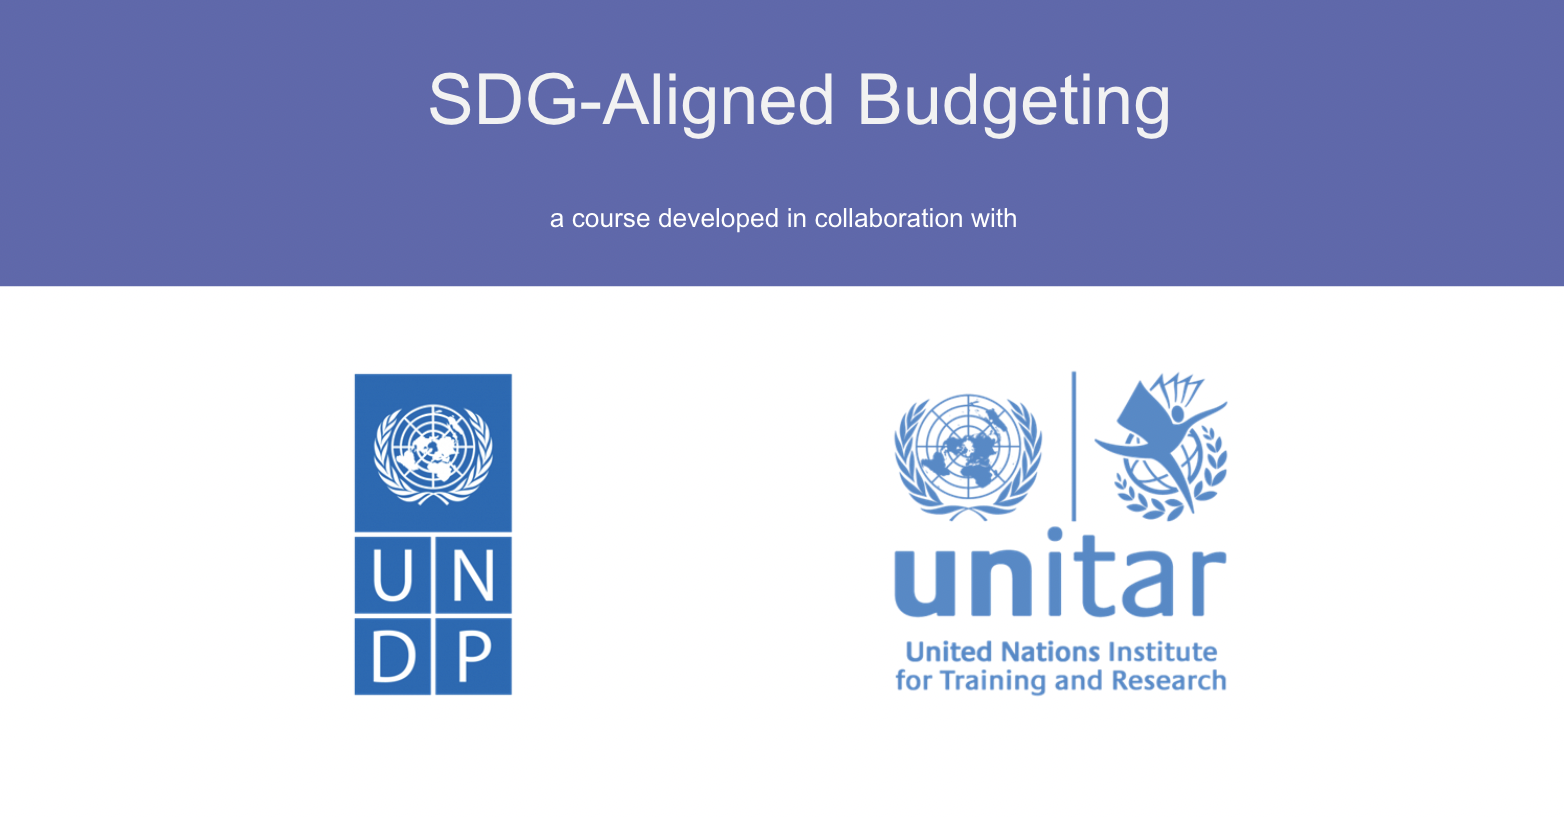 SDG-aligned Budgeting